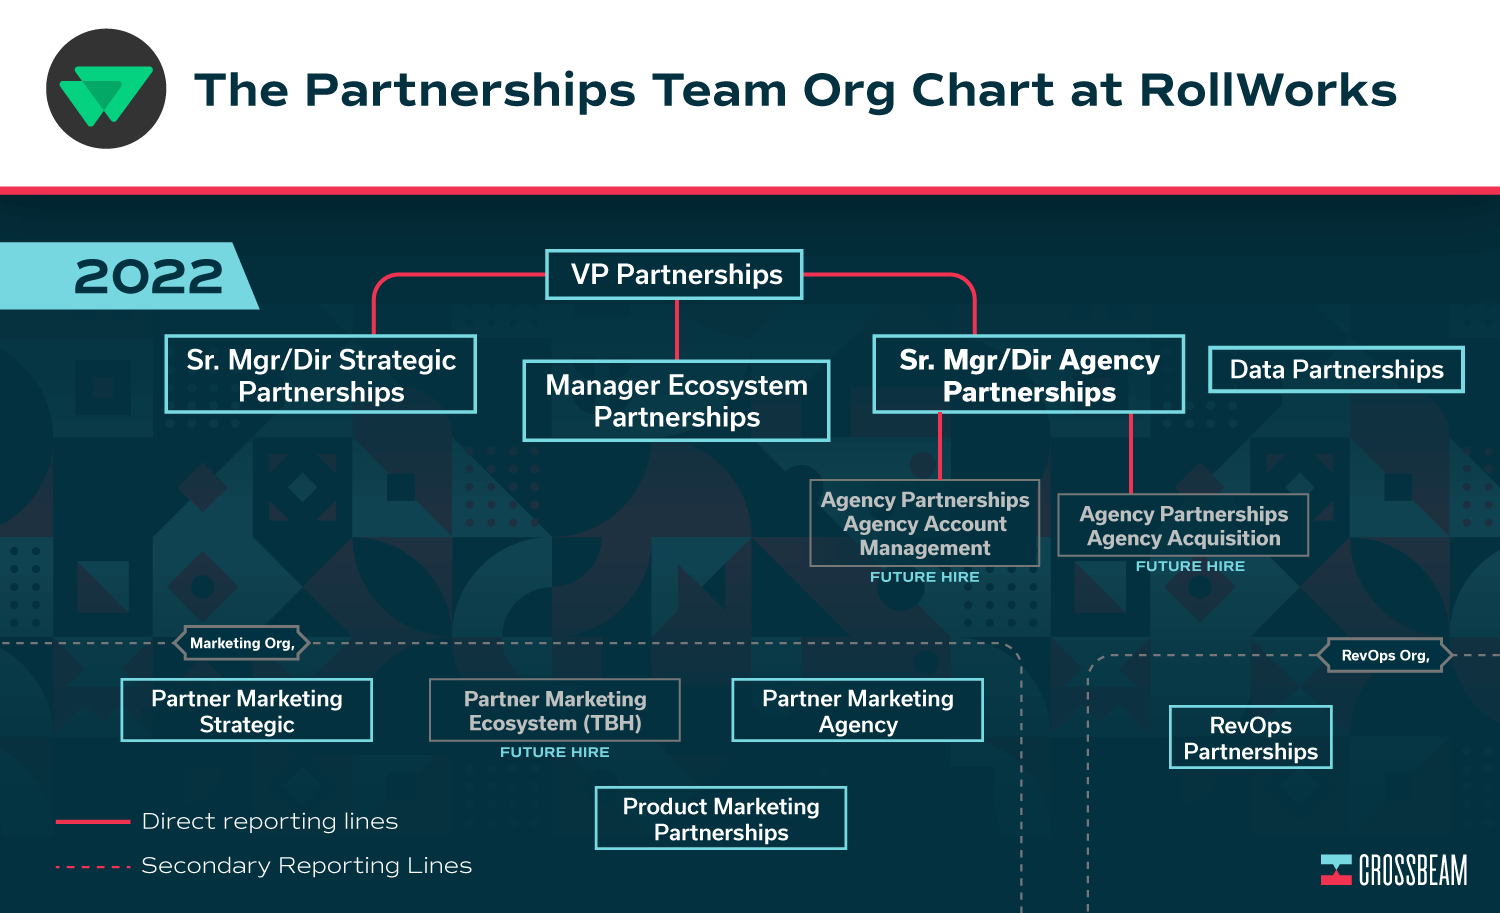 rollworks-org-chart-crossbeam-partnerships-team